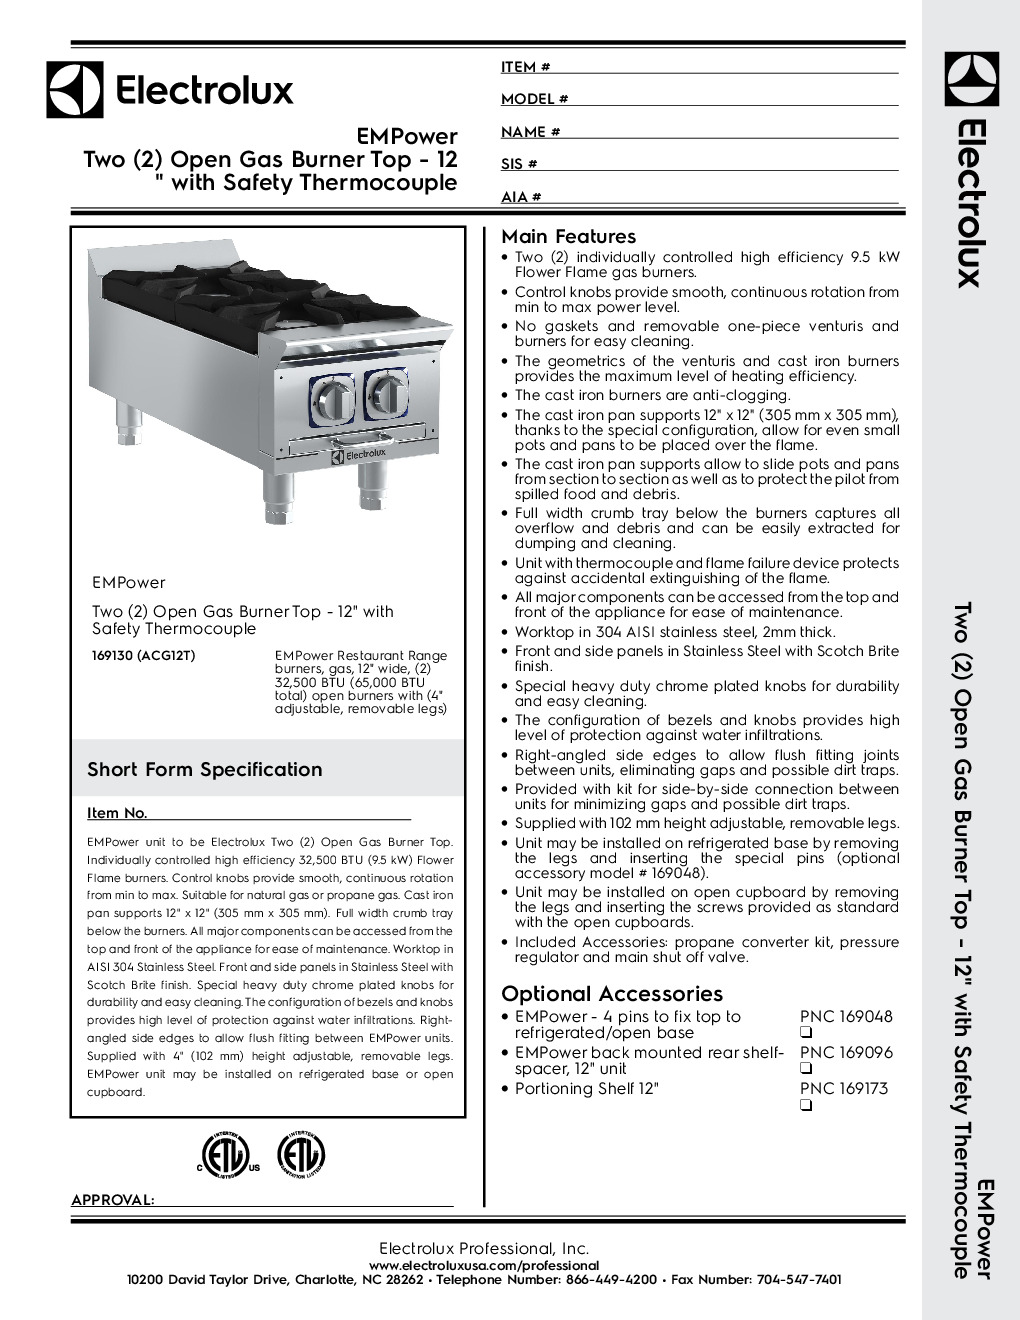 Electrolux 169130 Gas Countertop Hotplate